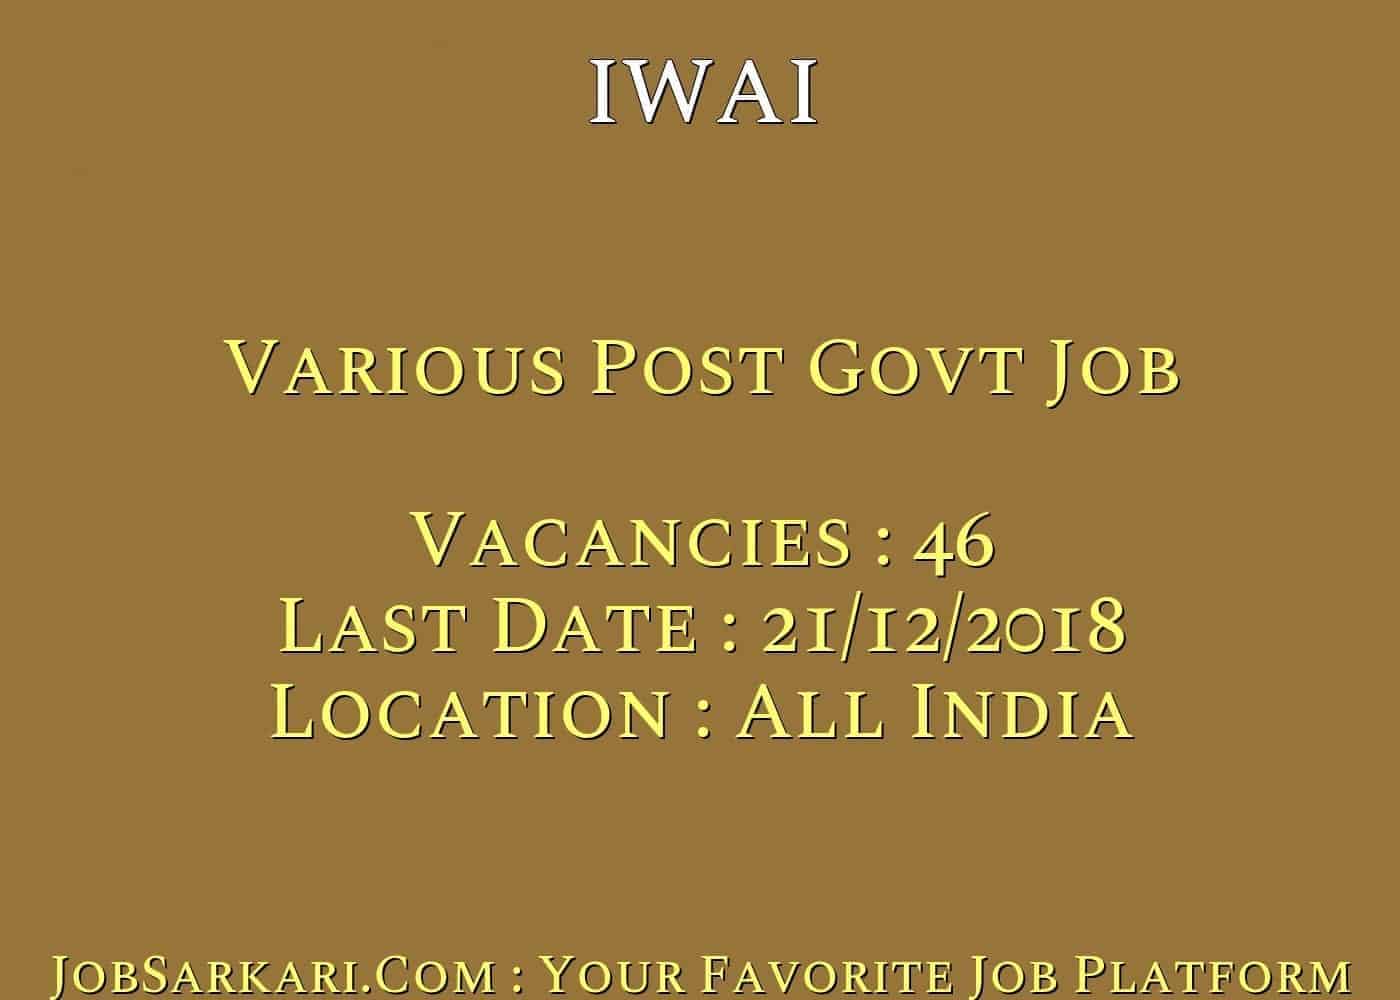 IWAI Recruitment 2018 For Various Post Govt Job